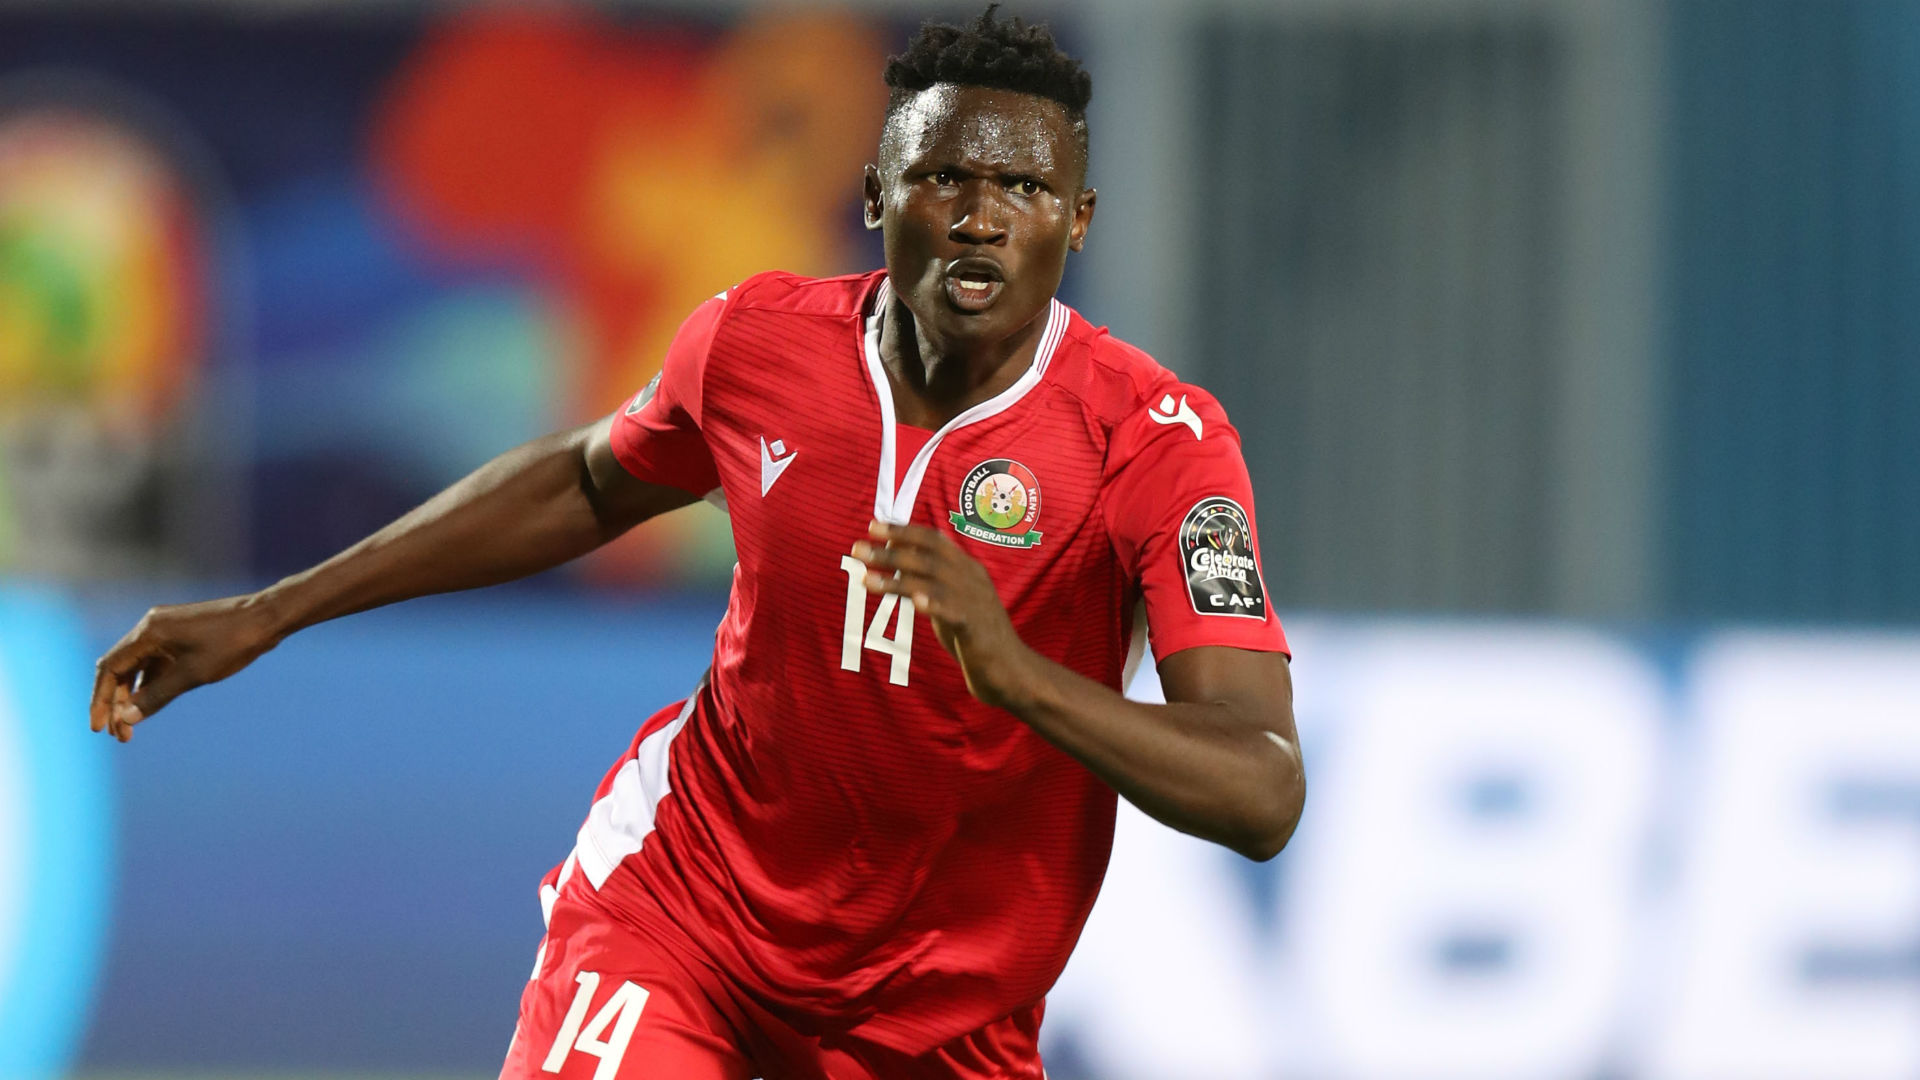 Michael Olunga Faces Backlash Over Qatar World Cup Performance